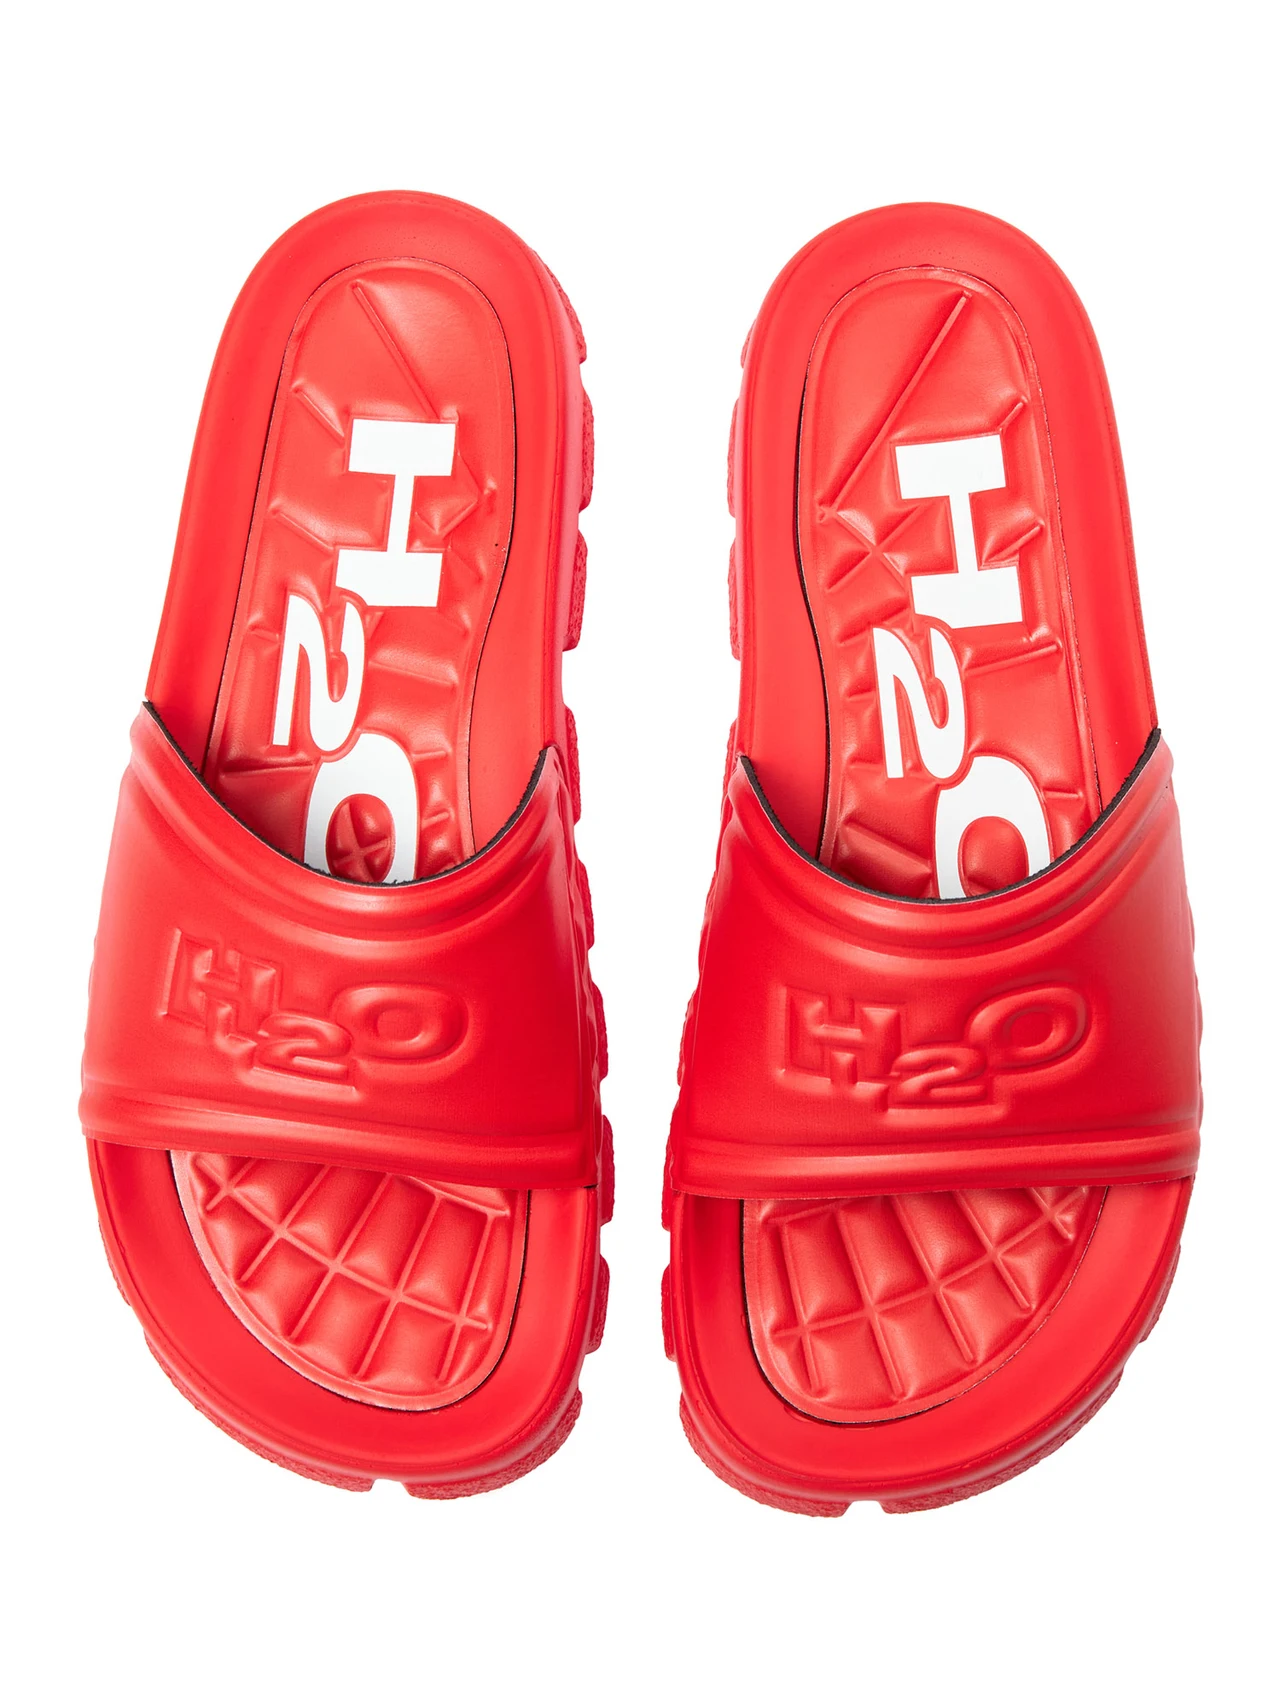 triathlete Bangladesh Tilbagekaldelse Sandaler | Sandaler fra de største brands | FashionDeluxe